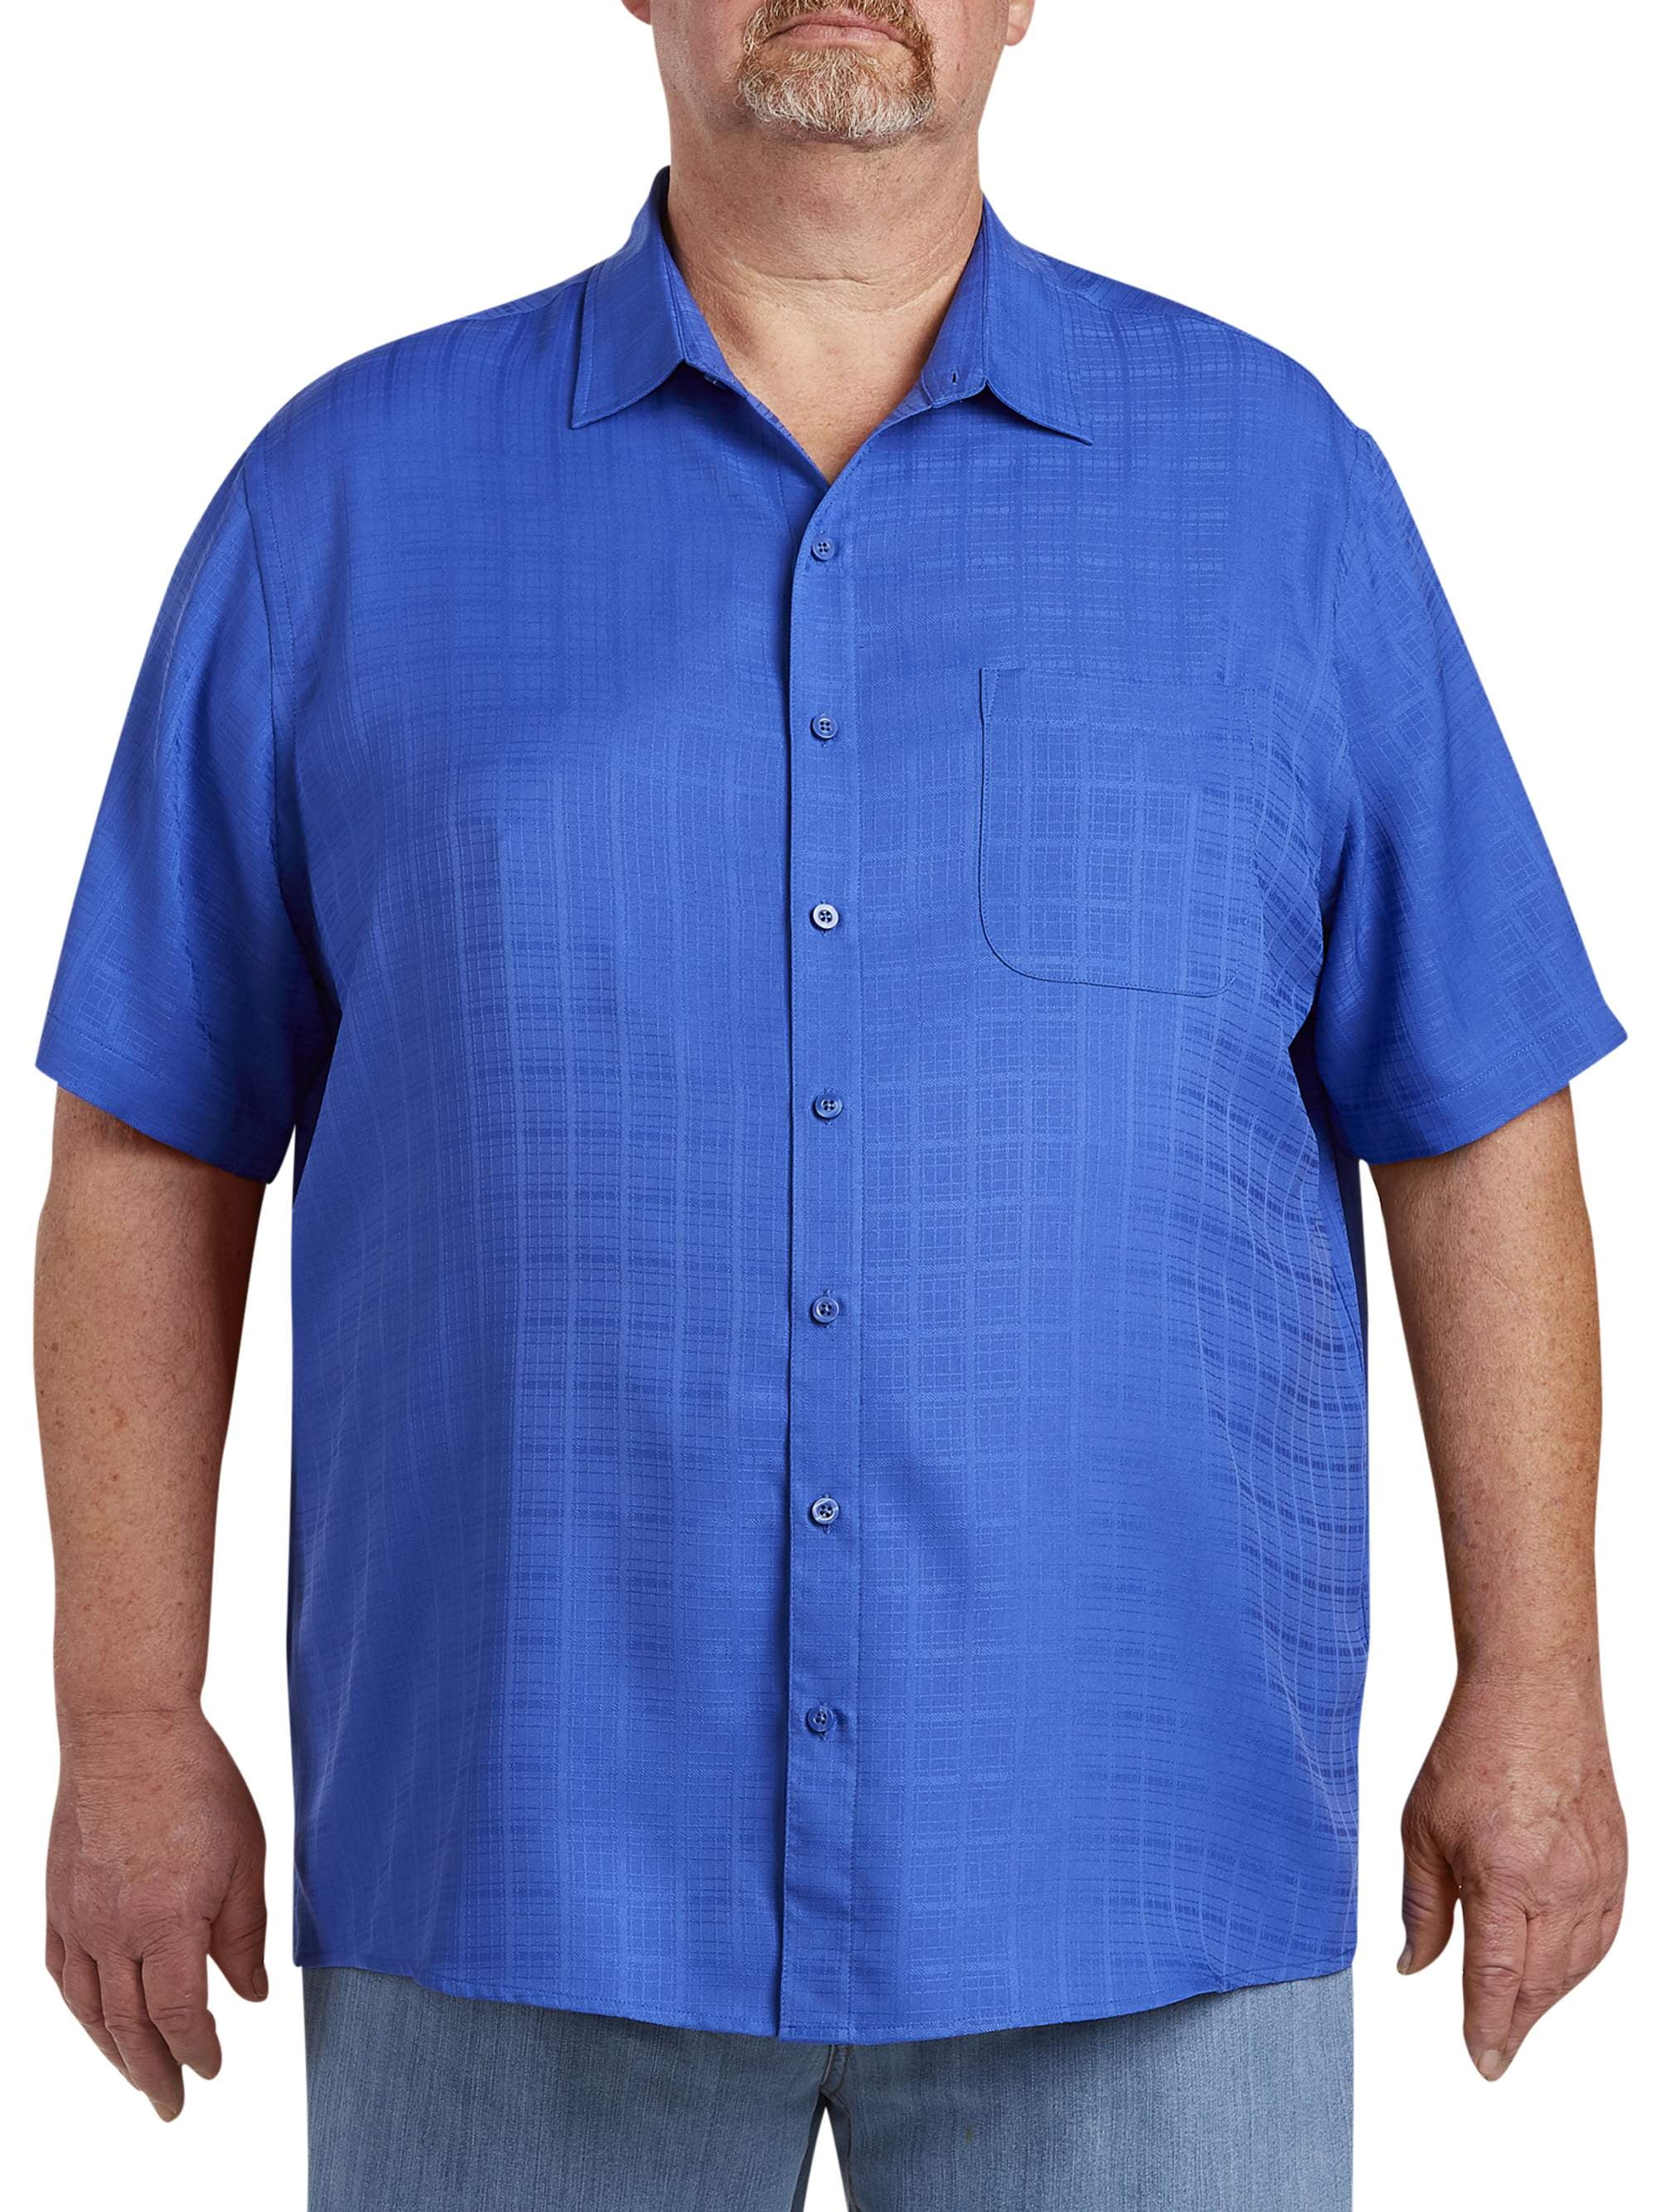 Canyon Ridge - Men's Big & Tall Easy Care Short Sleeve Plaid Shirt, up ...